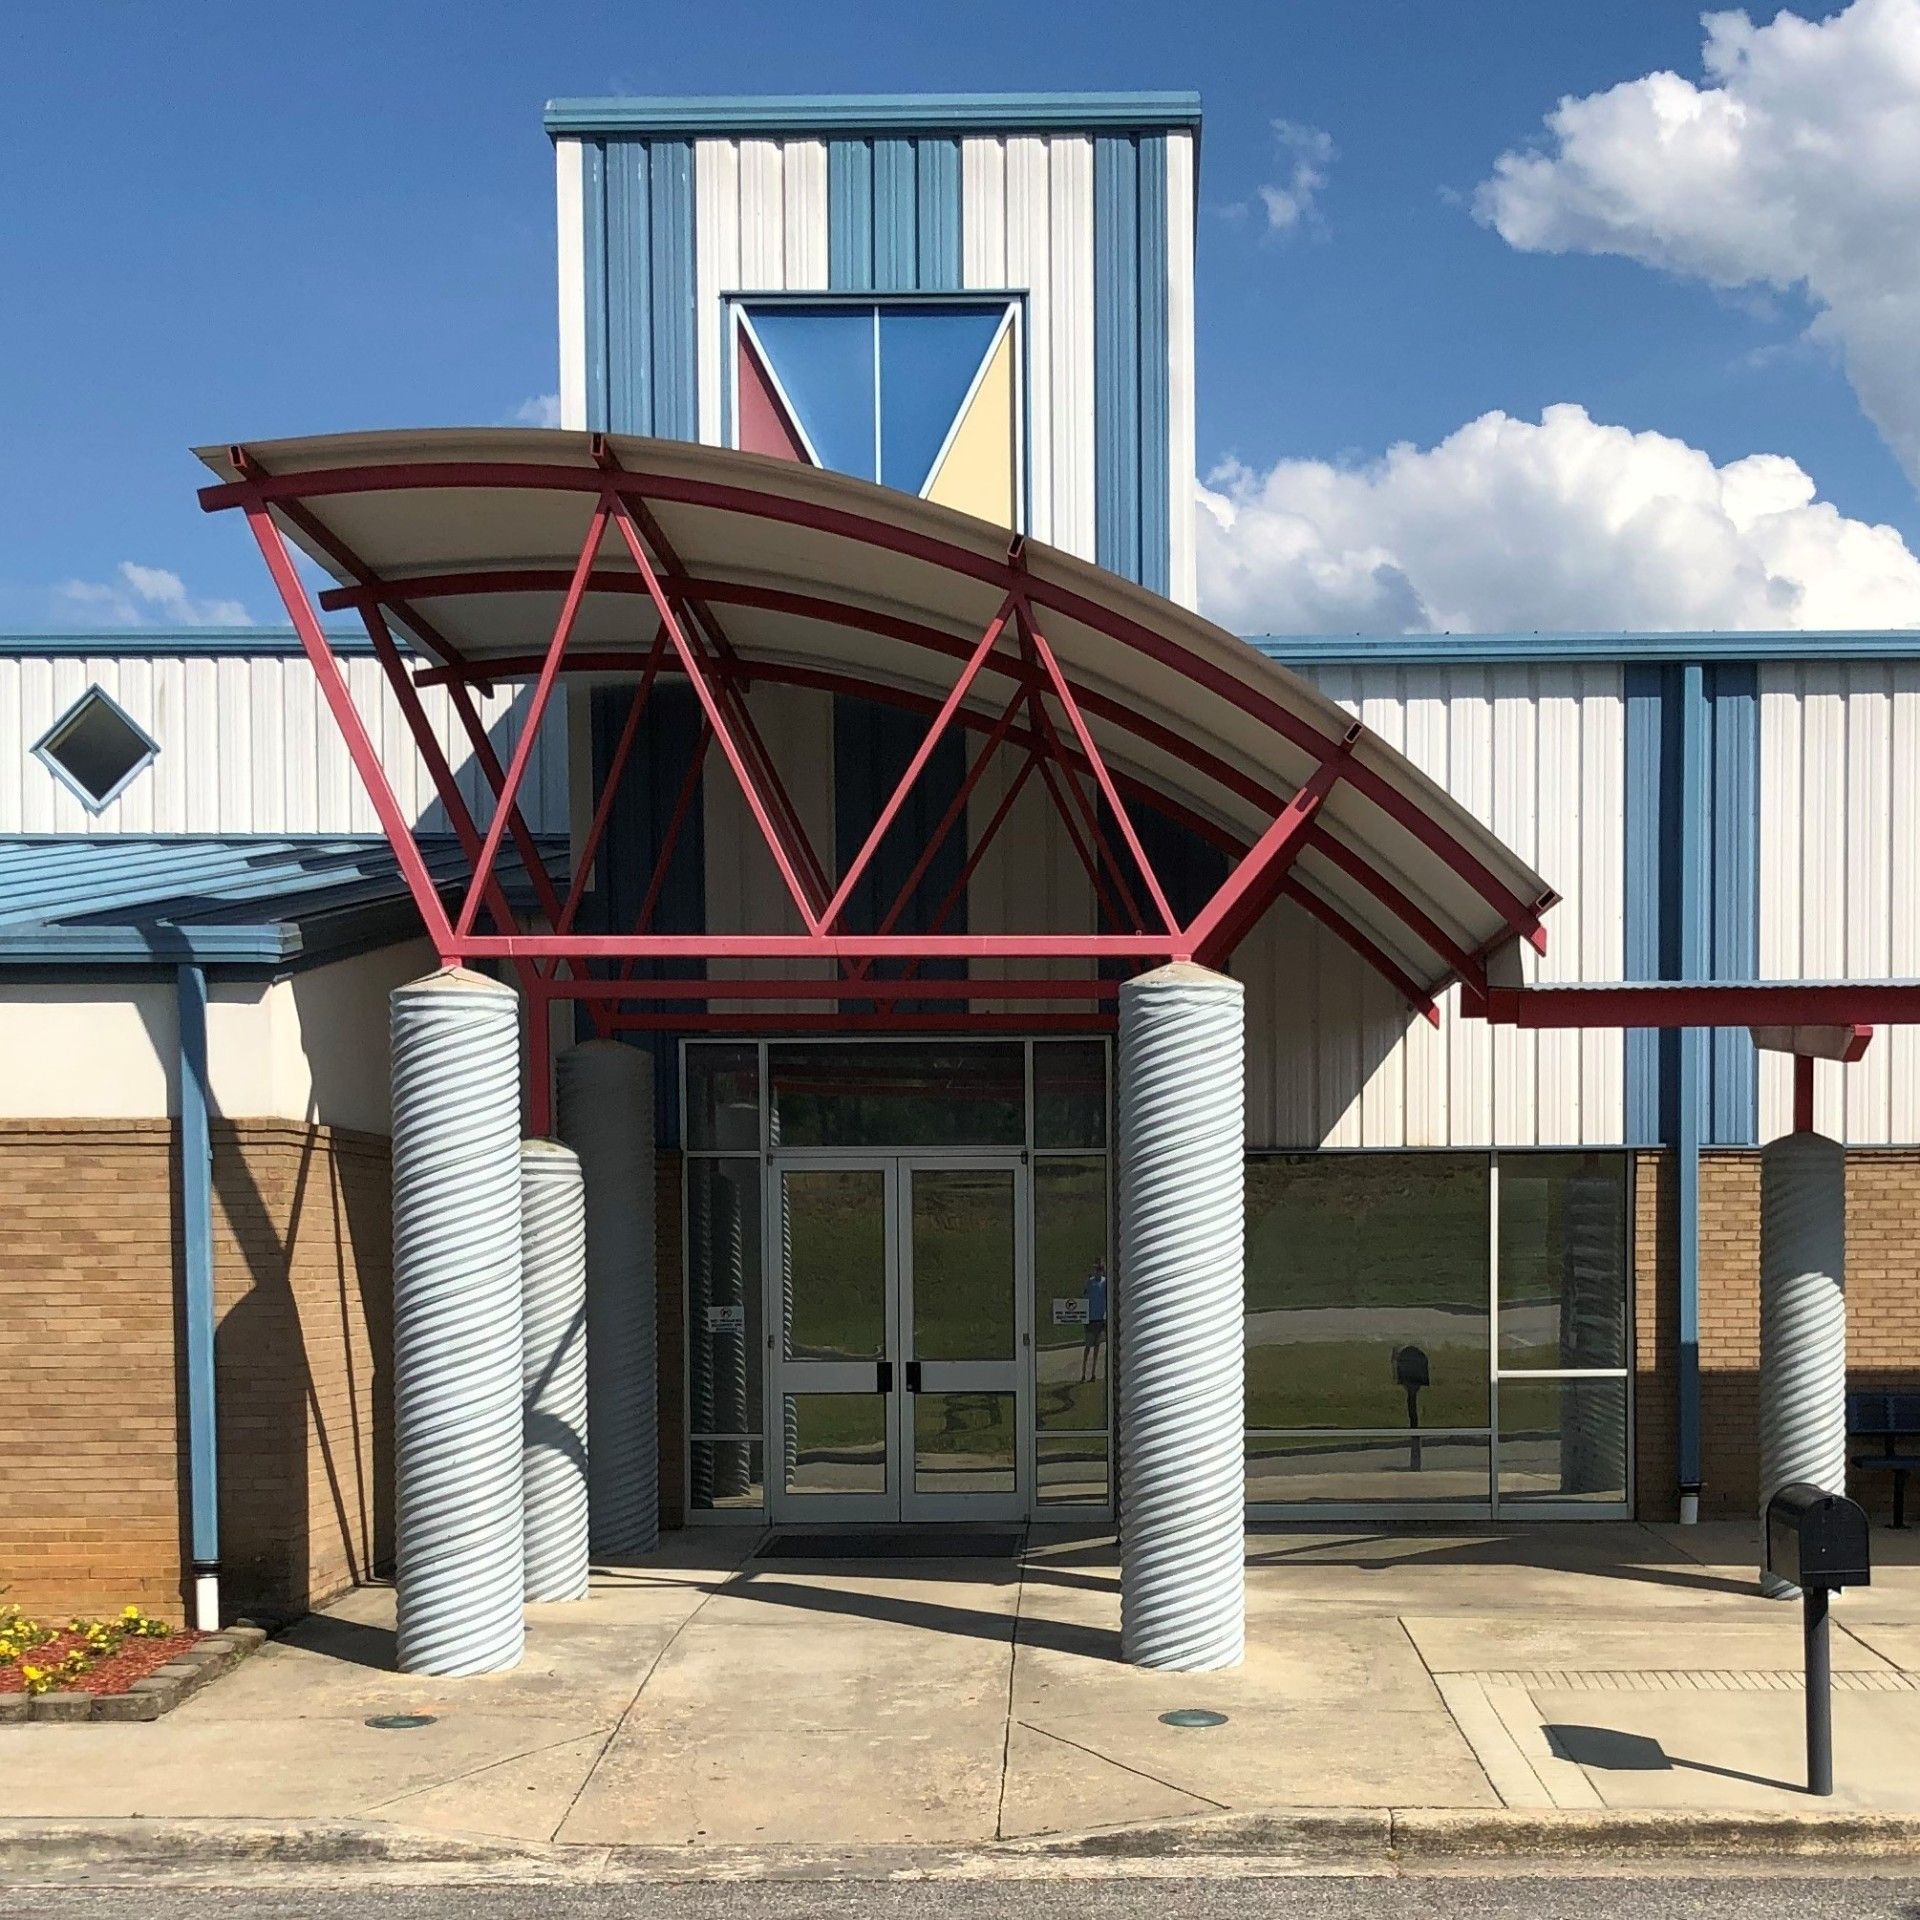 professional commercial tint installation services in May-2019 at Clanton Intermediate school in Clanton, AL